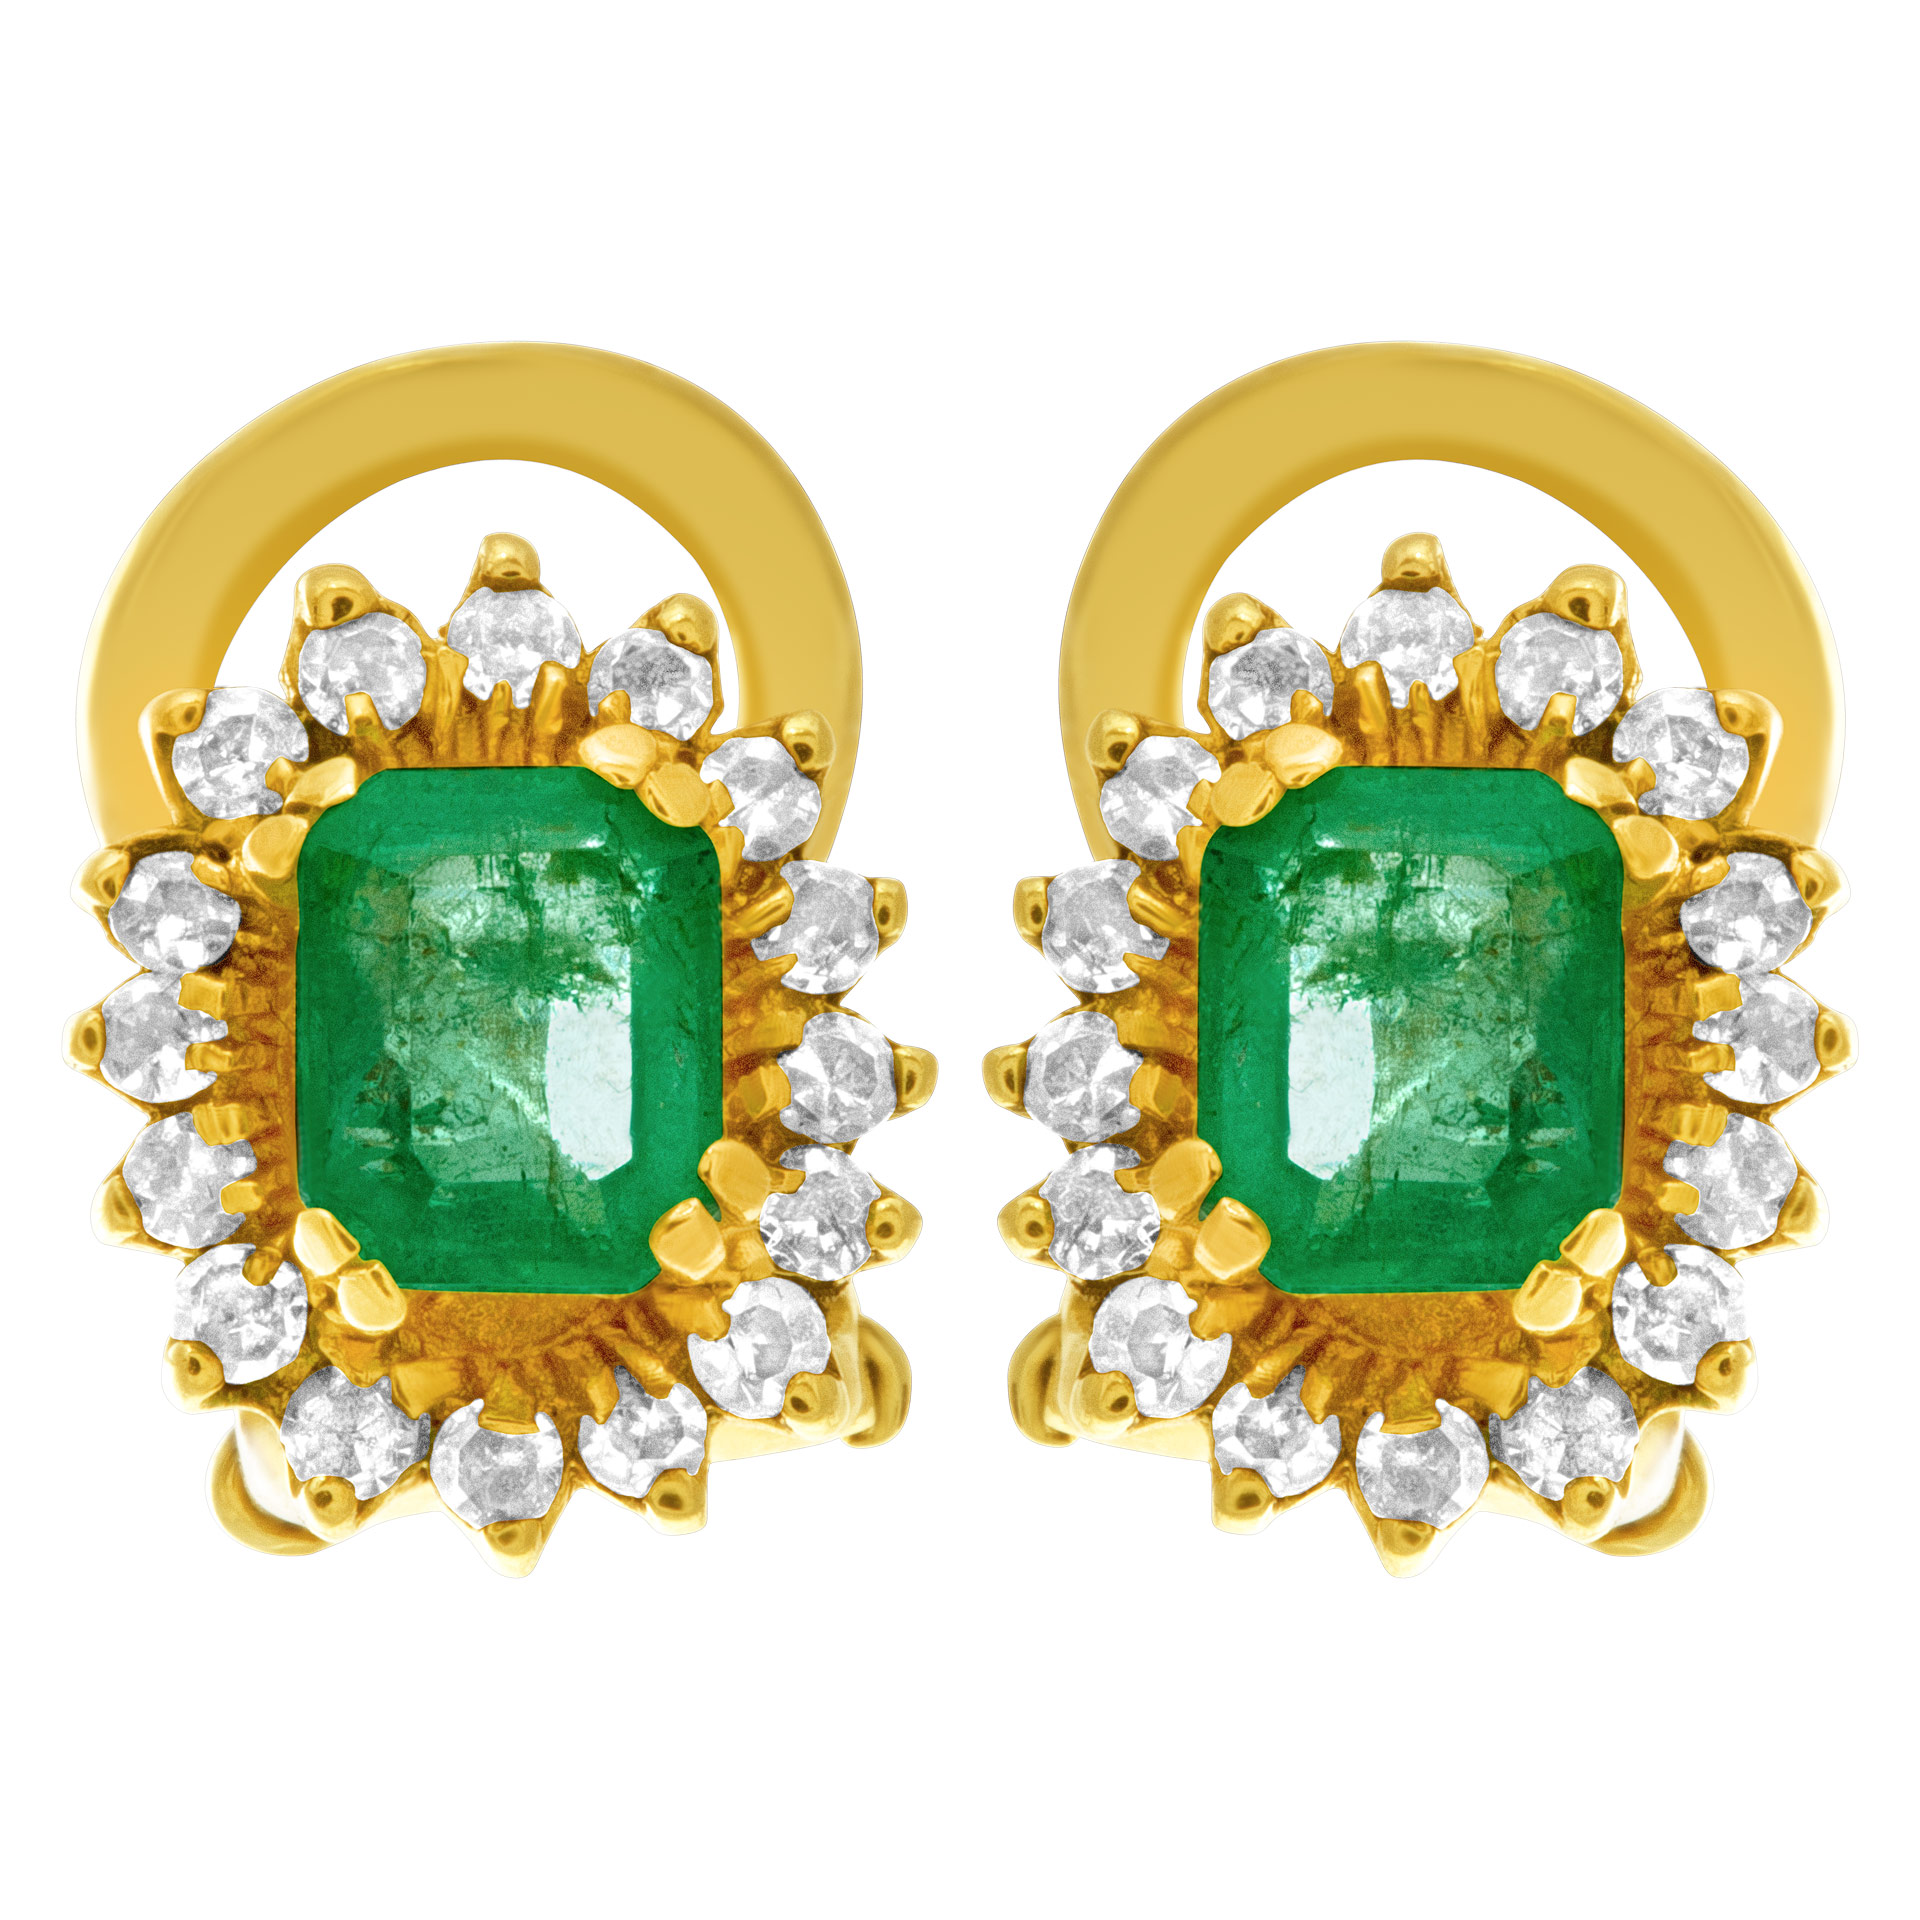 Emerald and diamond earrings in 18k image 1